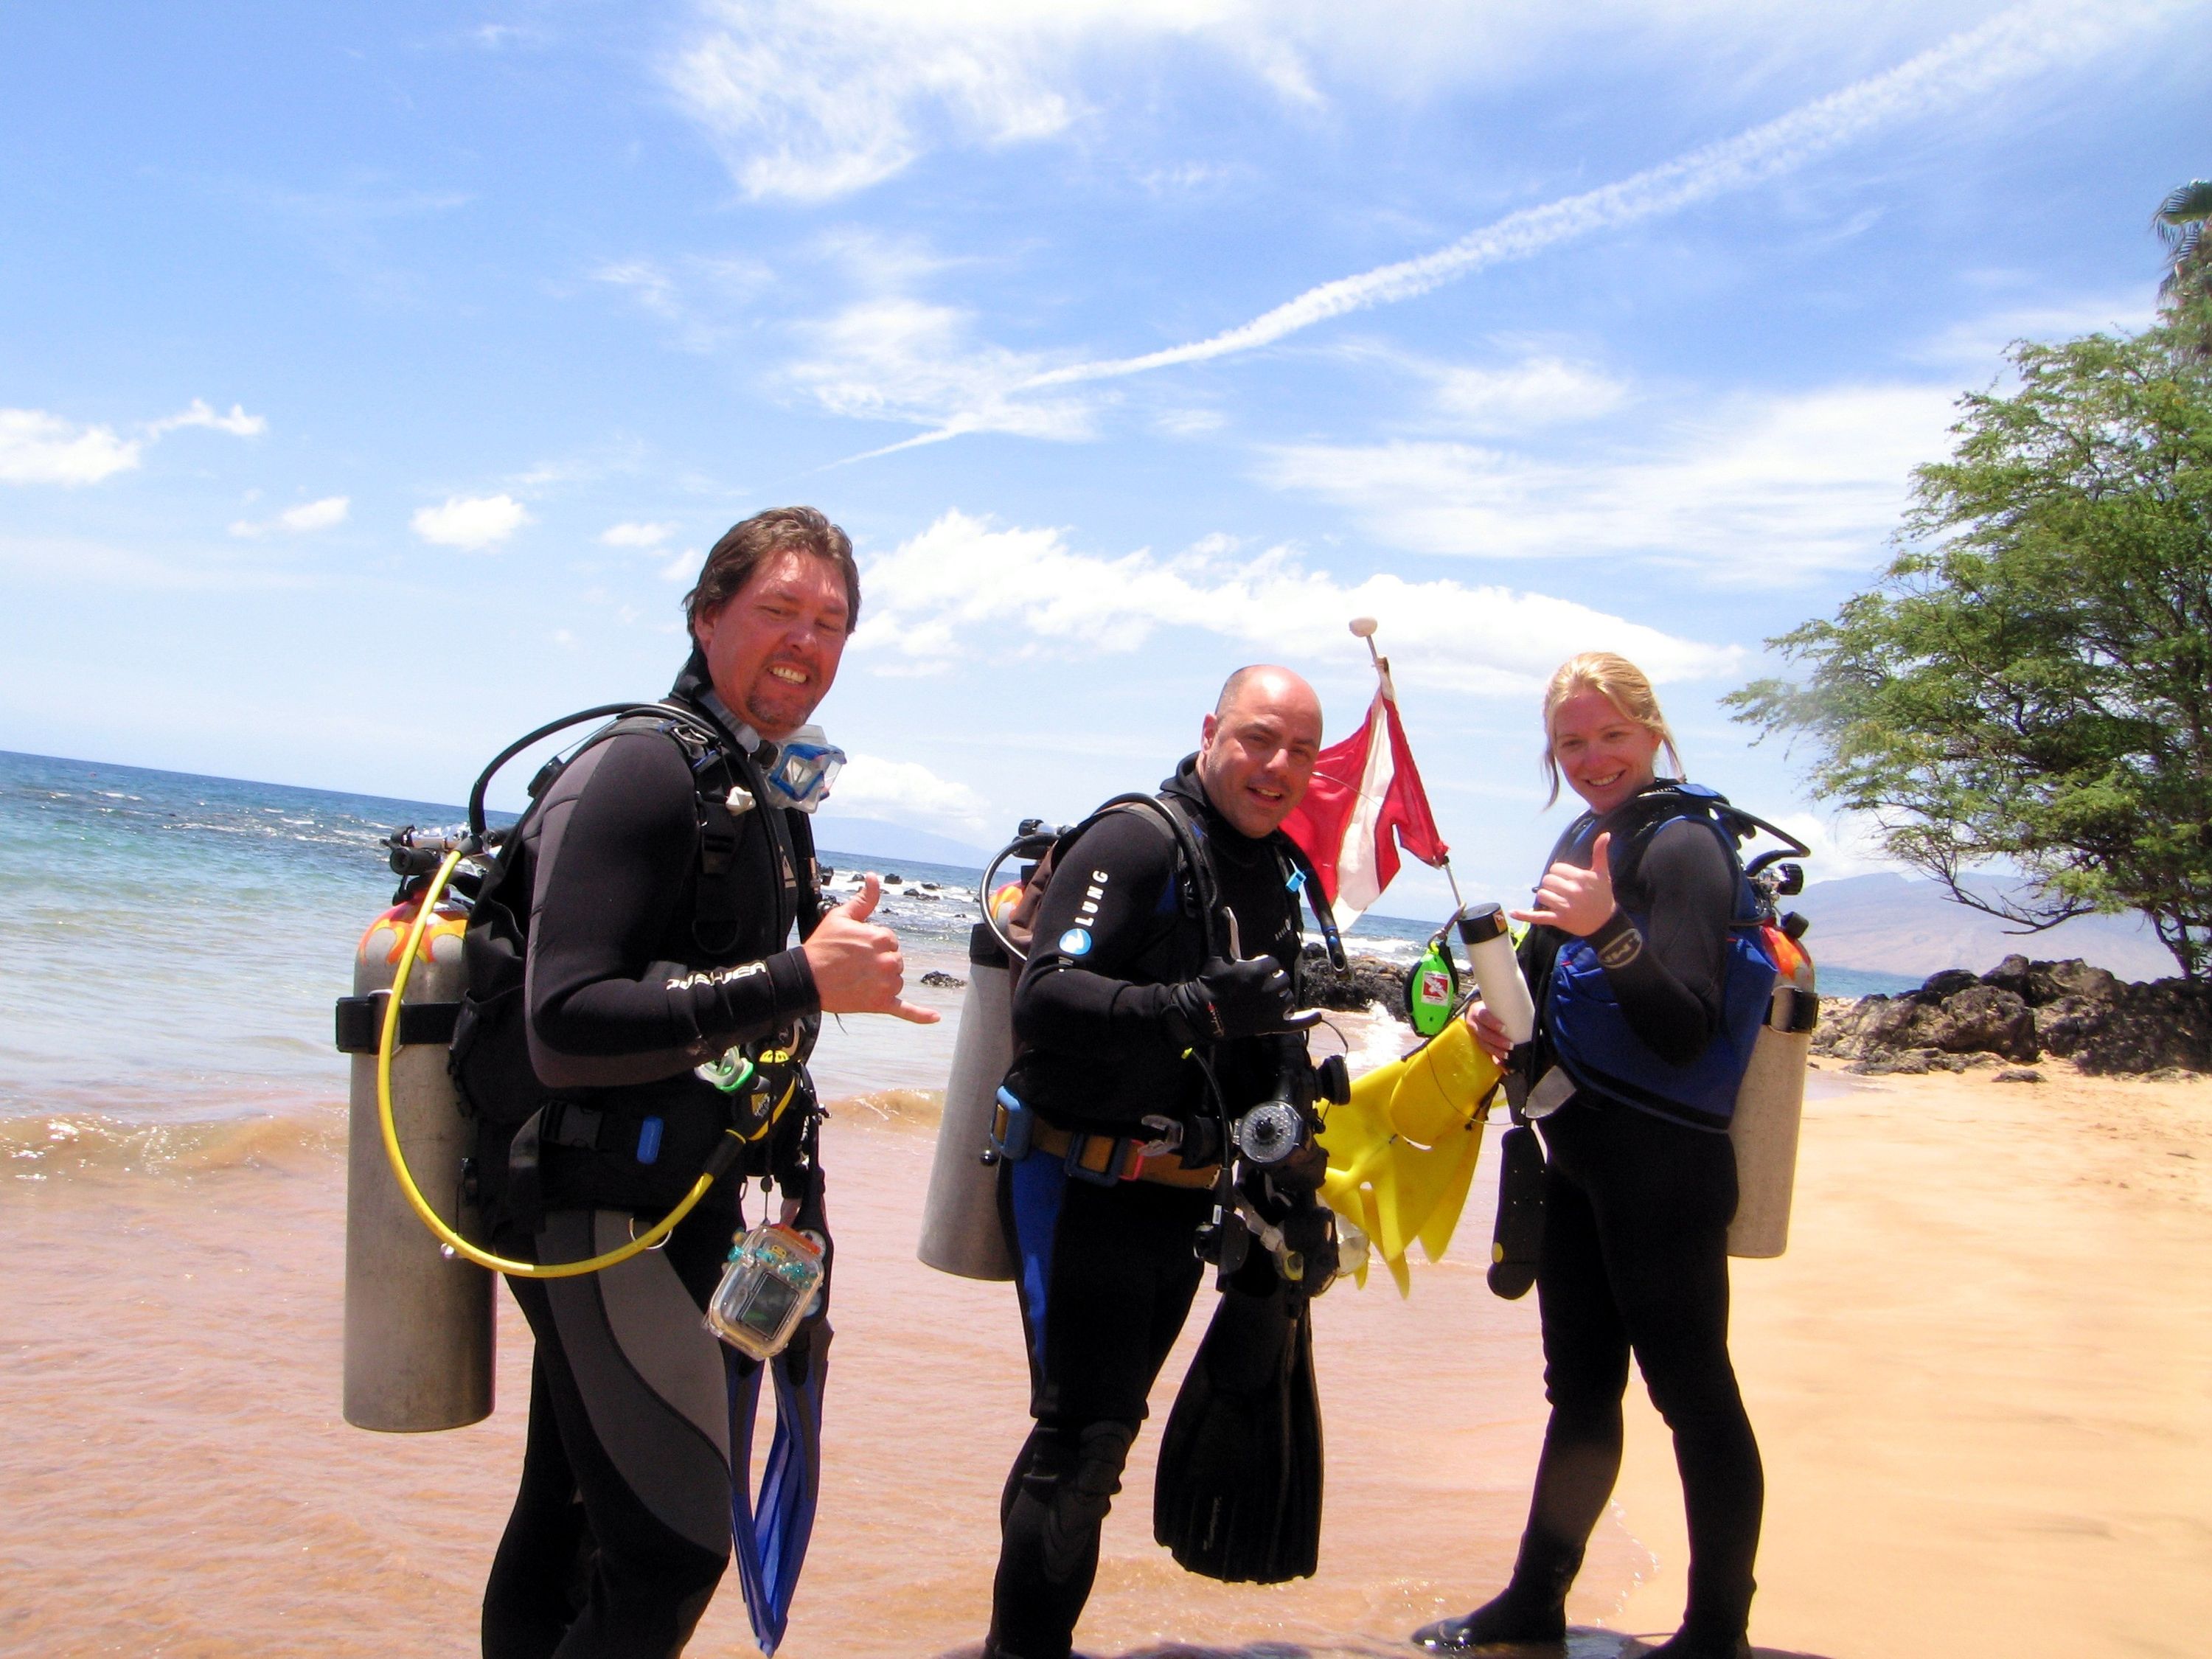 Chemtrail over divers at Ulua Beach, Maui, HI